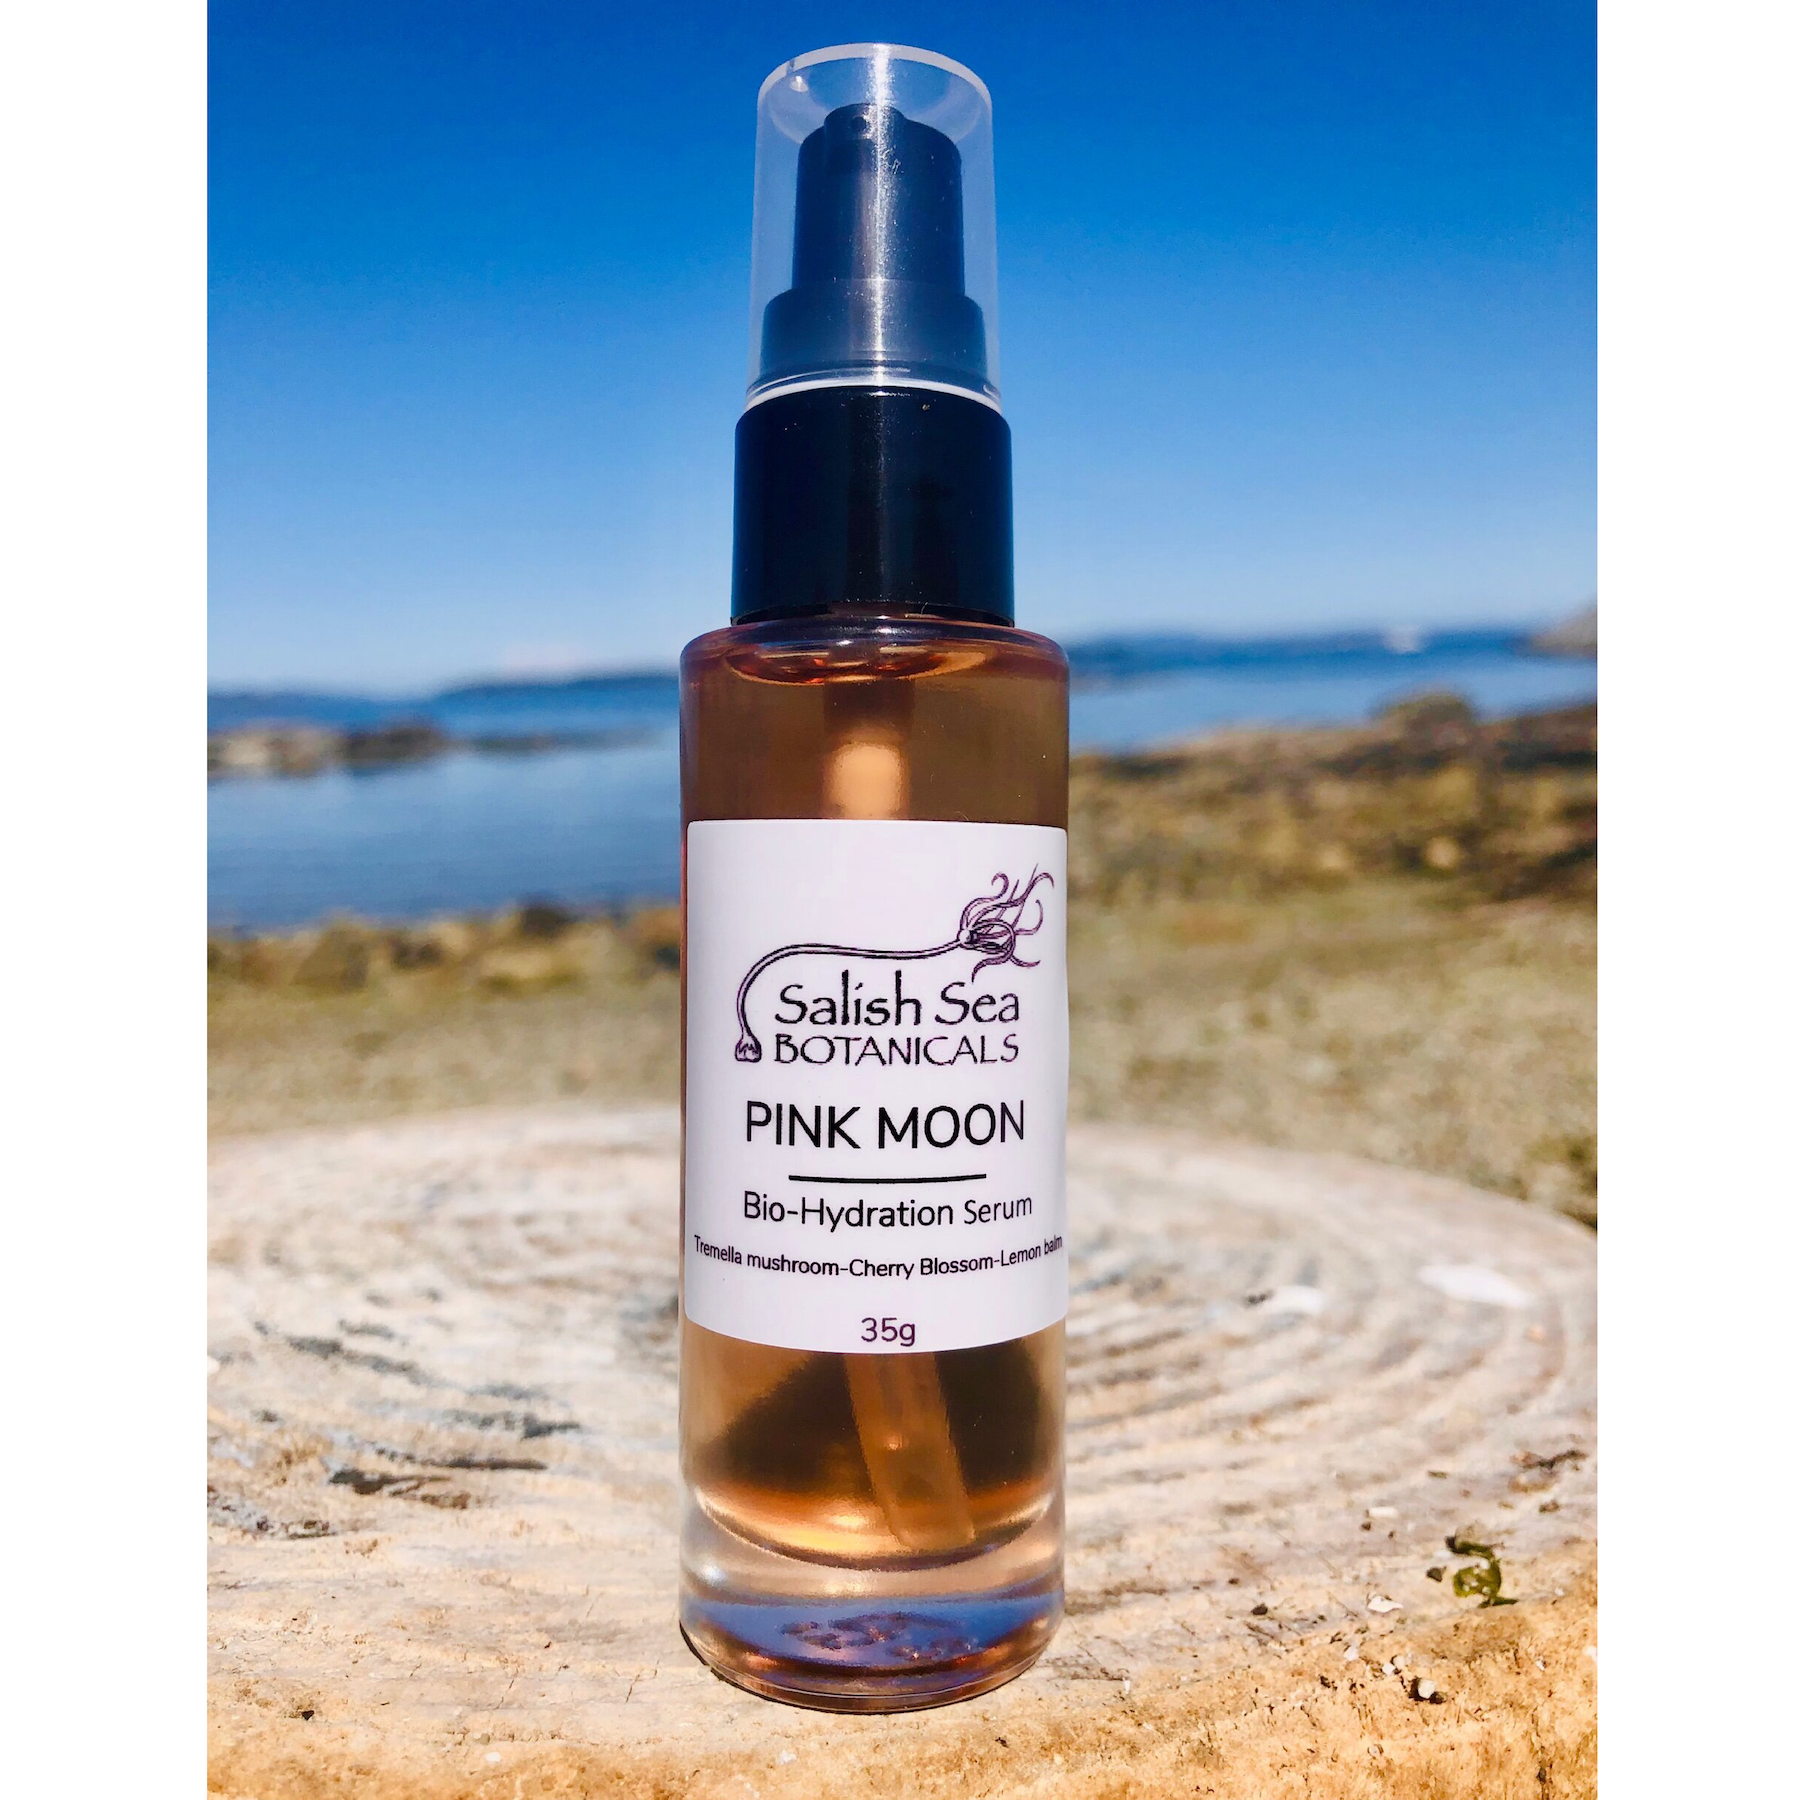 PINK MOON | Bio-hydration Serum by Salish Sea Botanicals